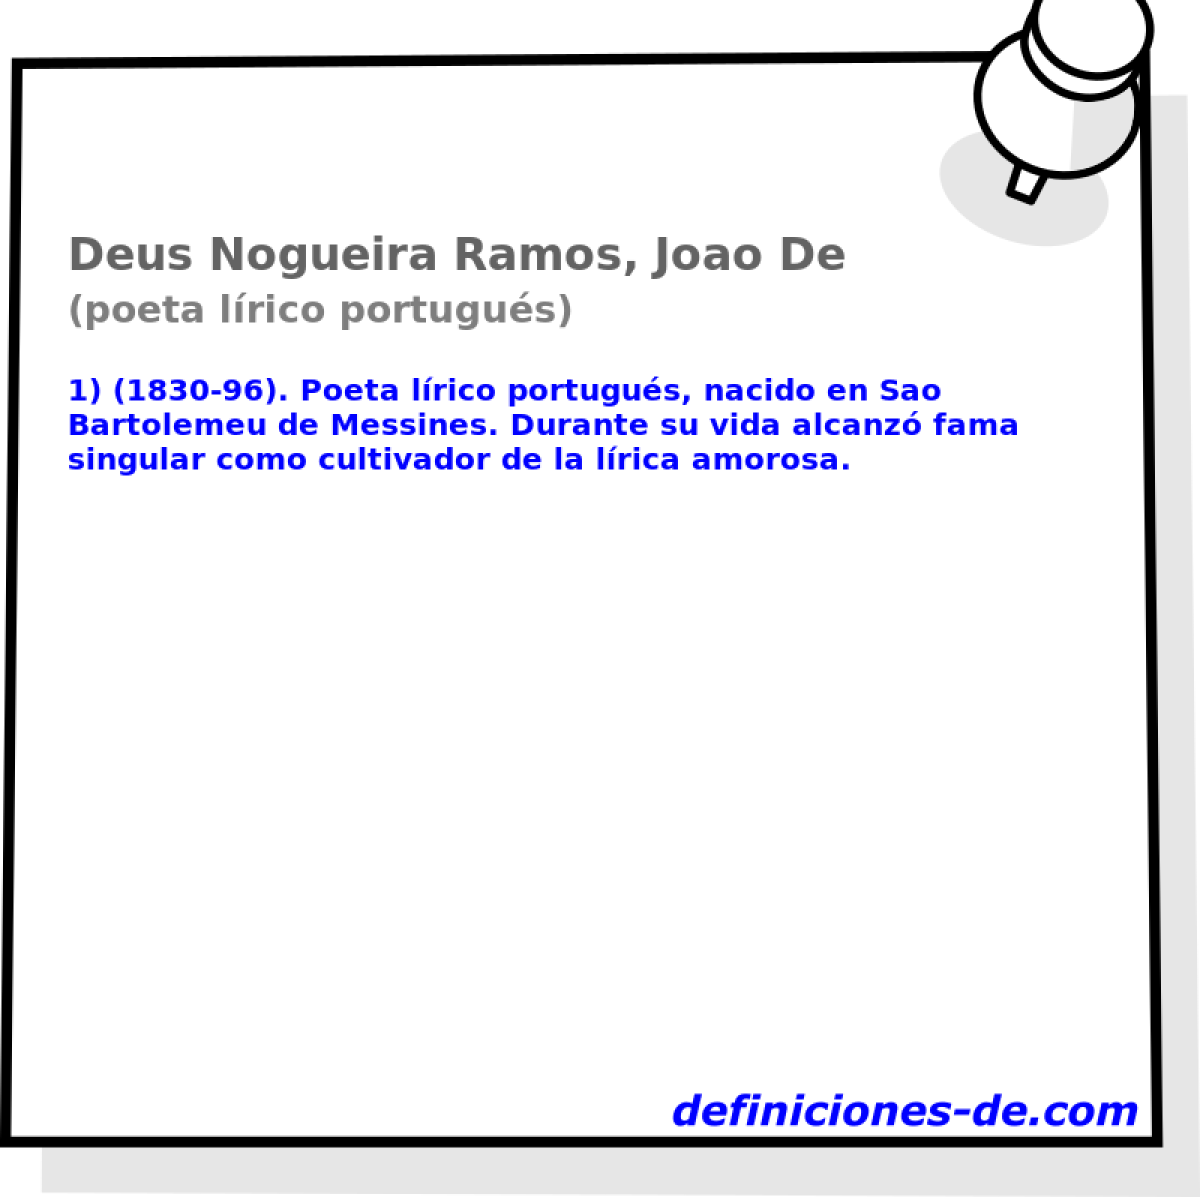 Deus Nogueira Ramos, Joao De (poeta lrico portugus)